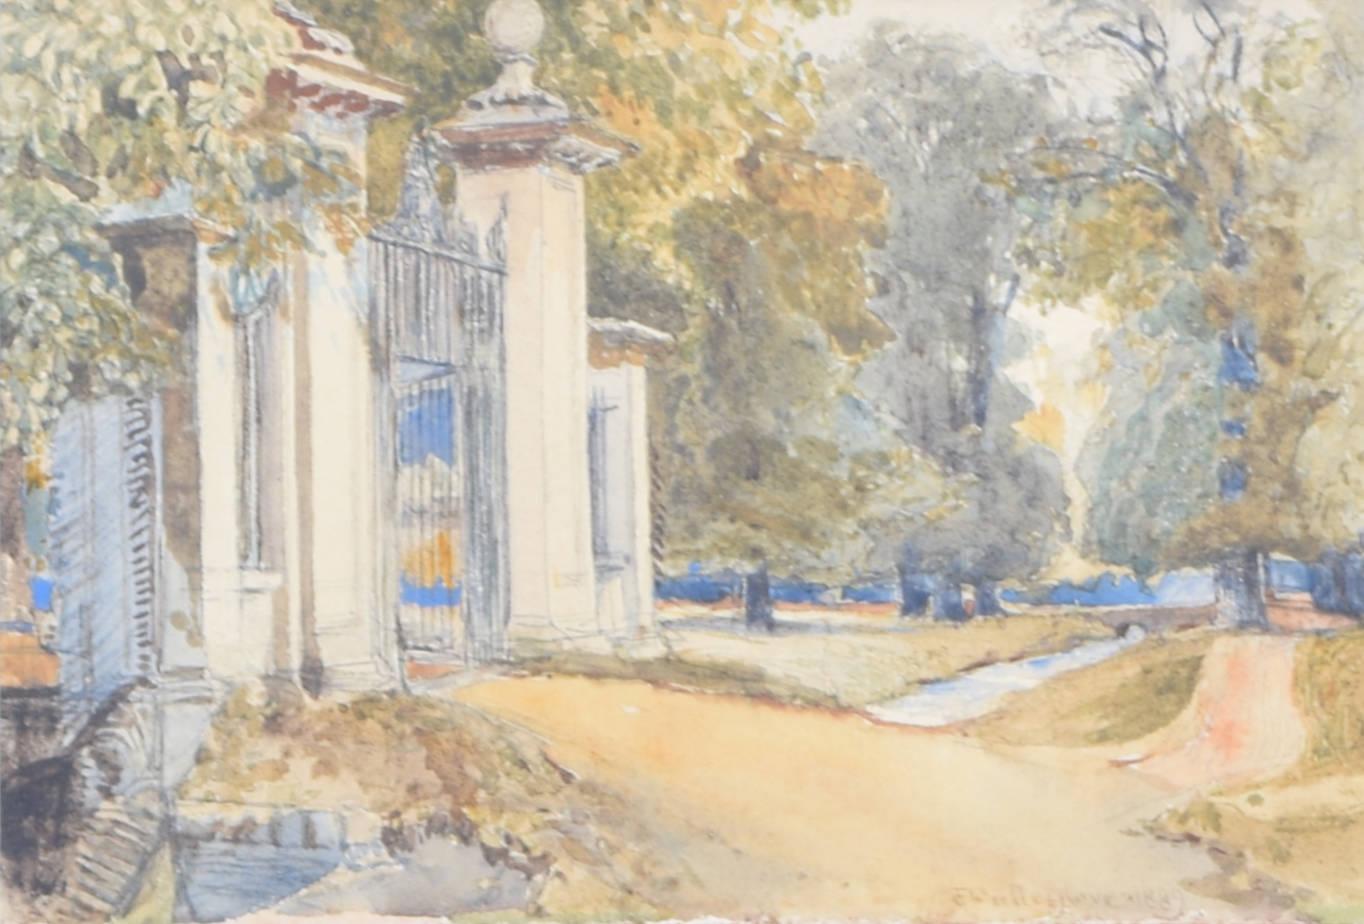 Clare College Gates, Cambridge watercolour by John Fulleylove